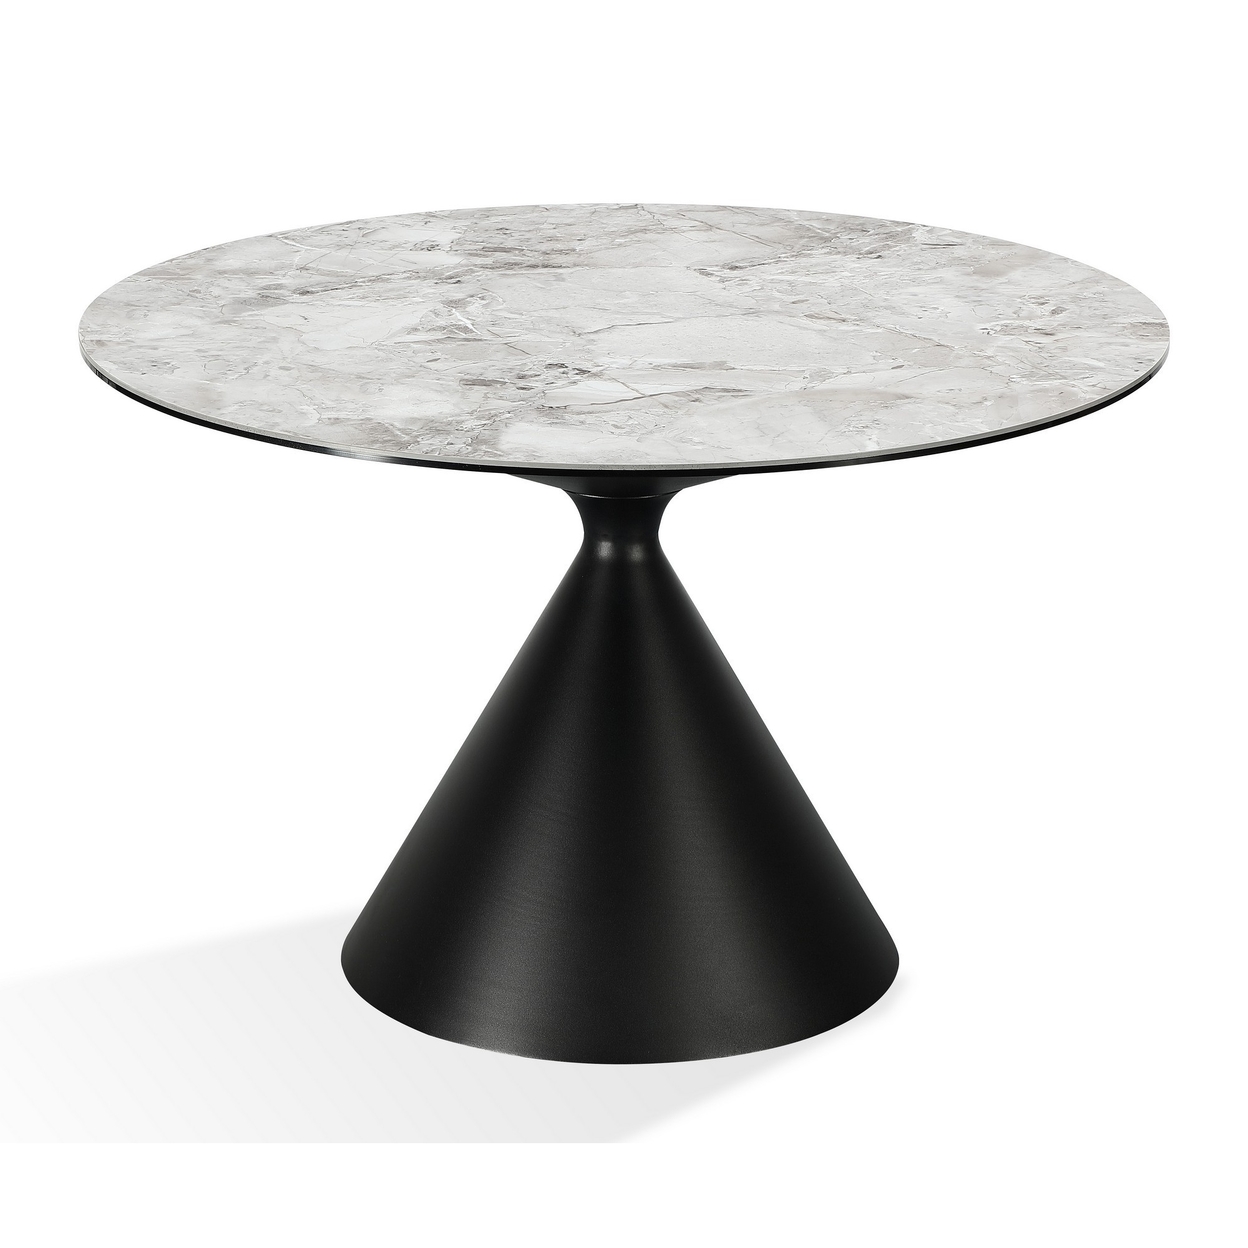 Lam 47 Inch Round Dining Table, Sintered Stone Top, Steel Base, Black - Saltoro Sherpi